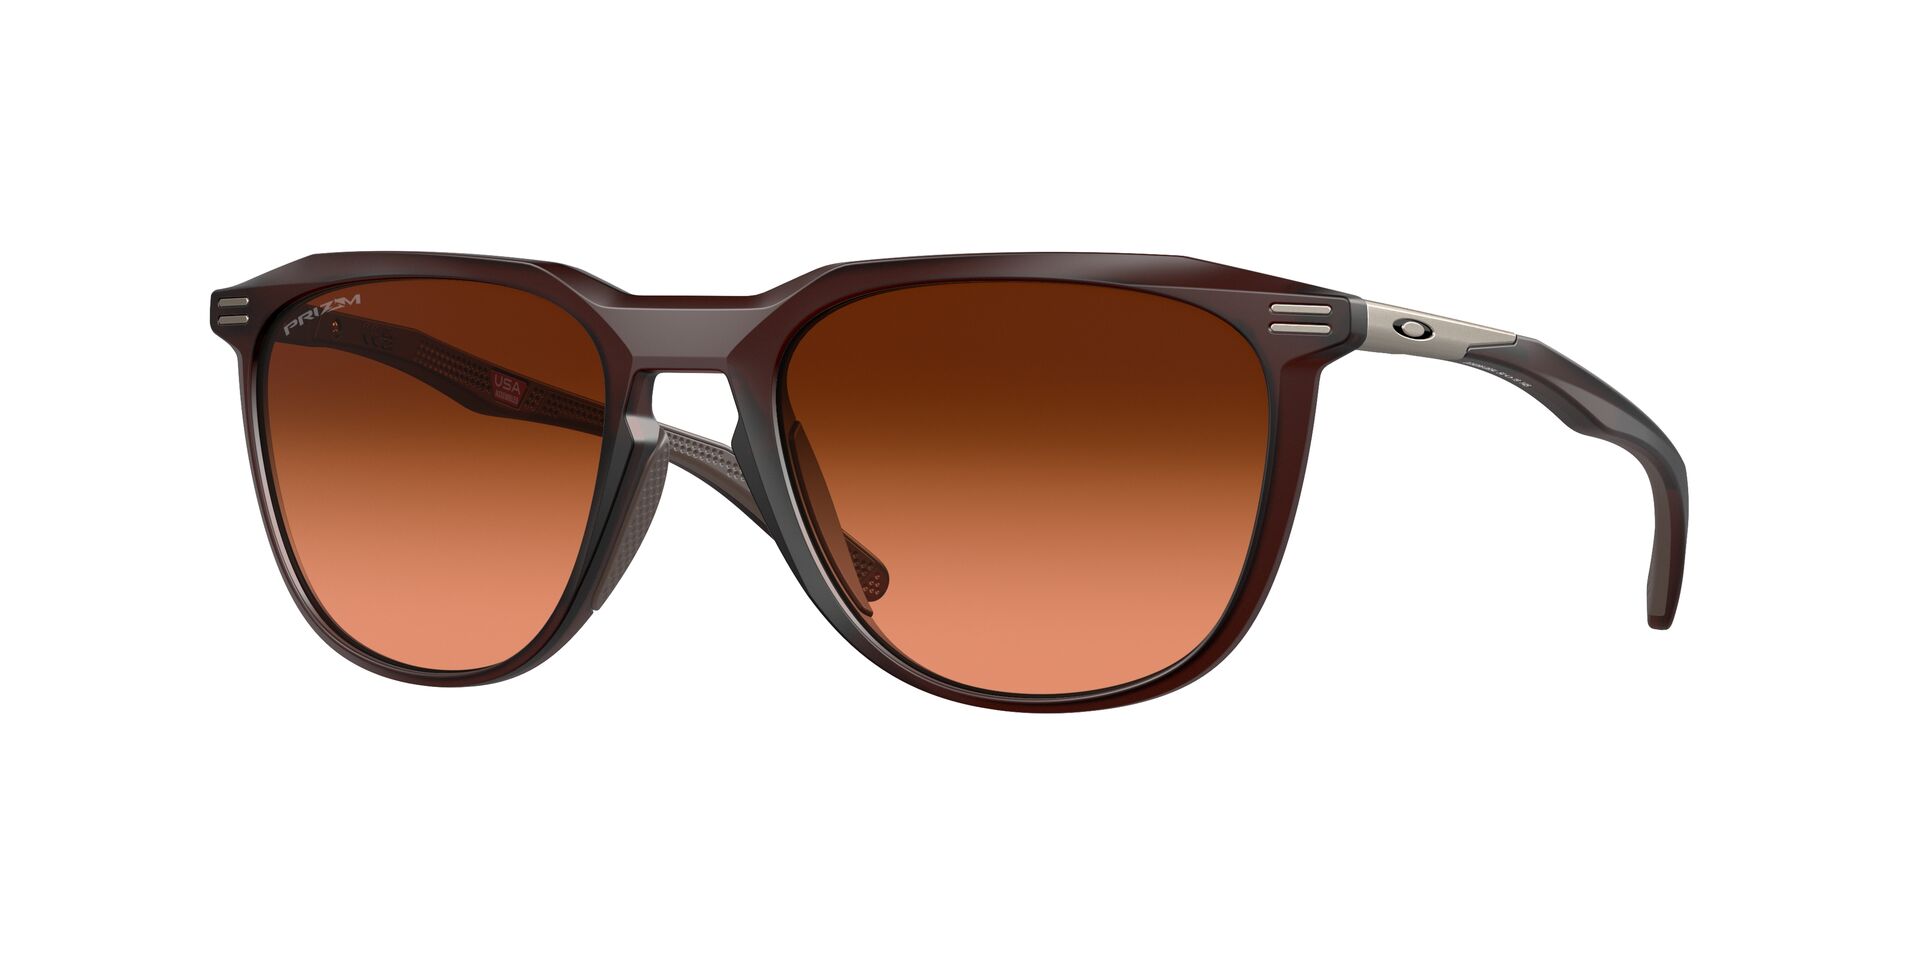 Nerdlane Brown Gradient Wayfarer Sunglasses S15C5810 @ ₹1299